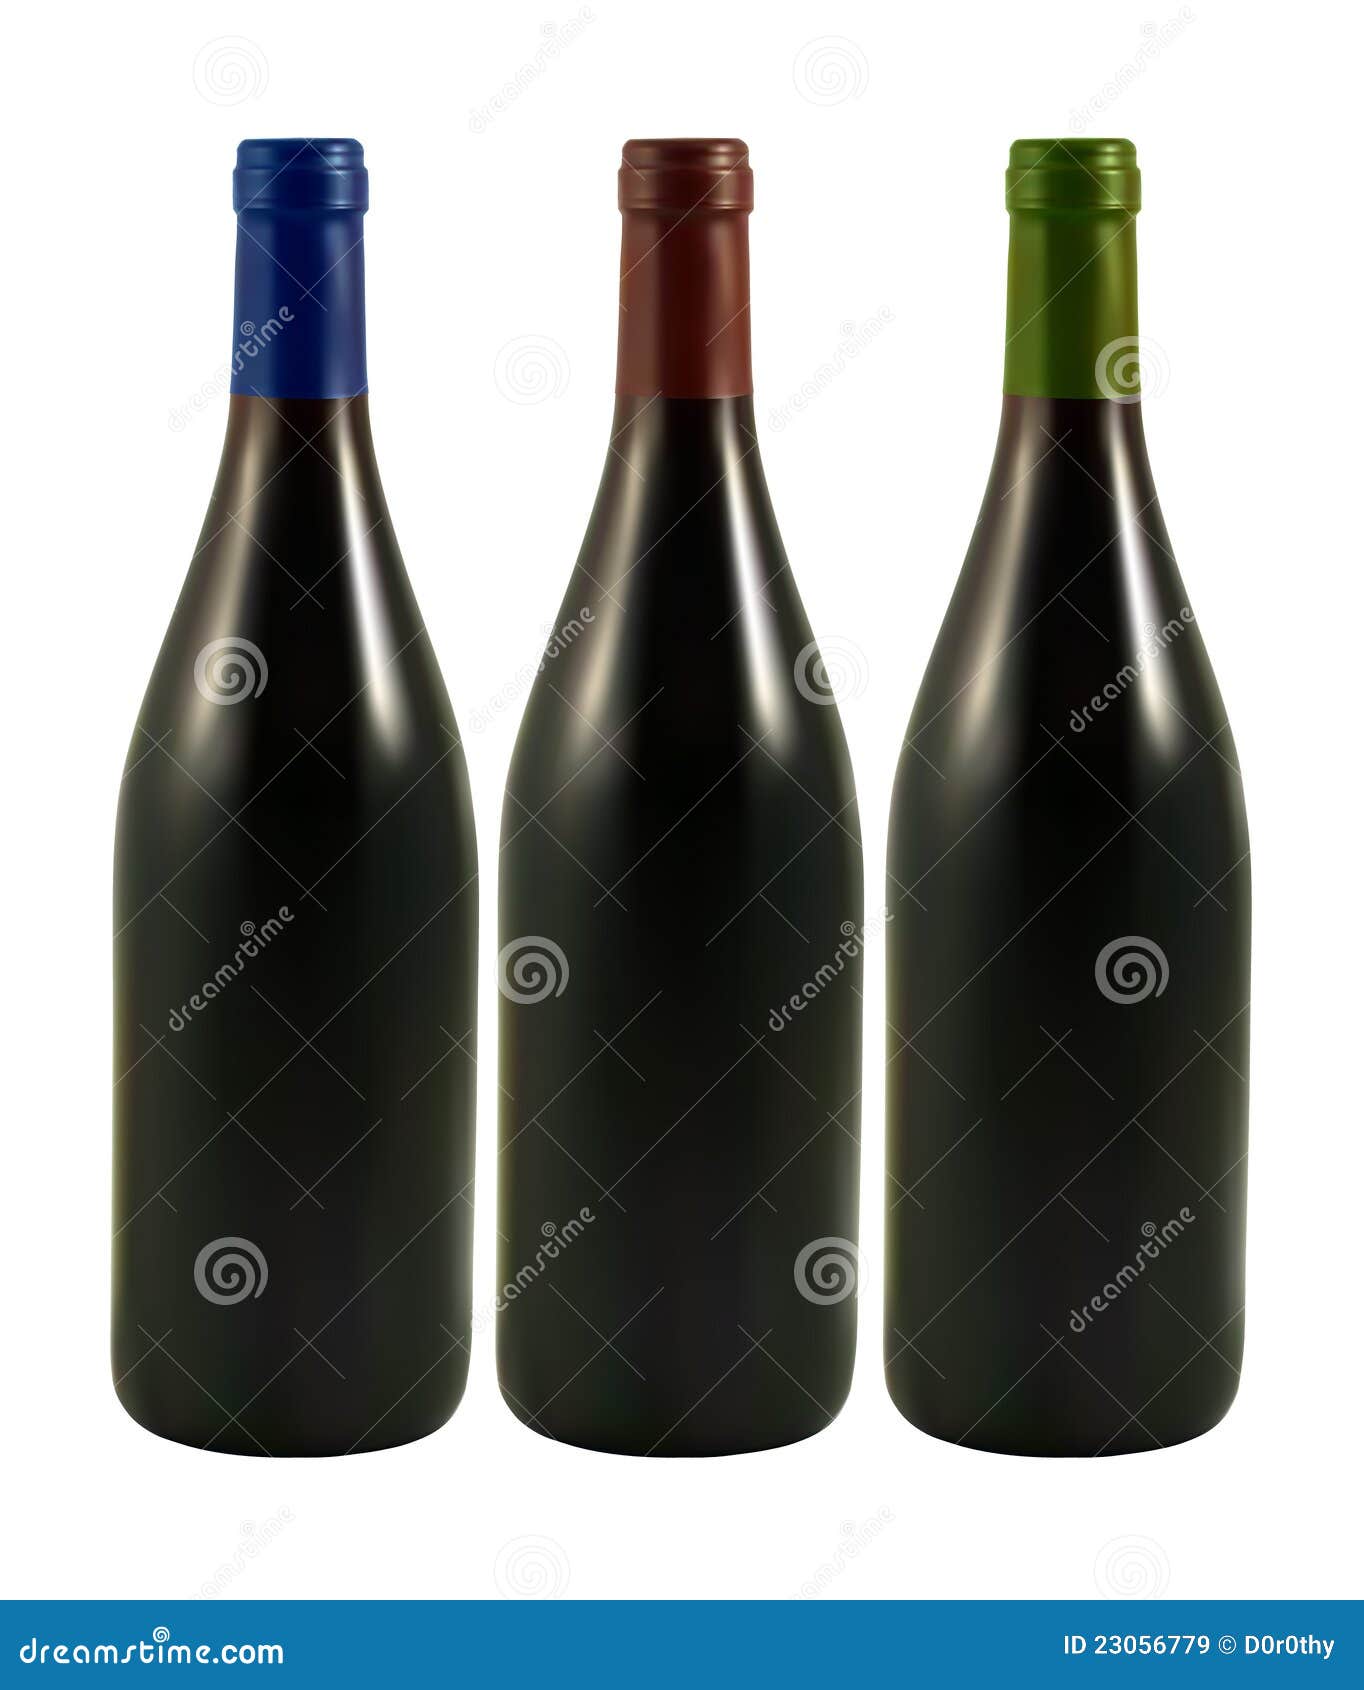 three wine bottles